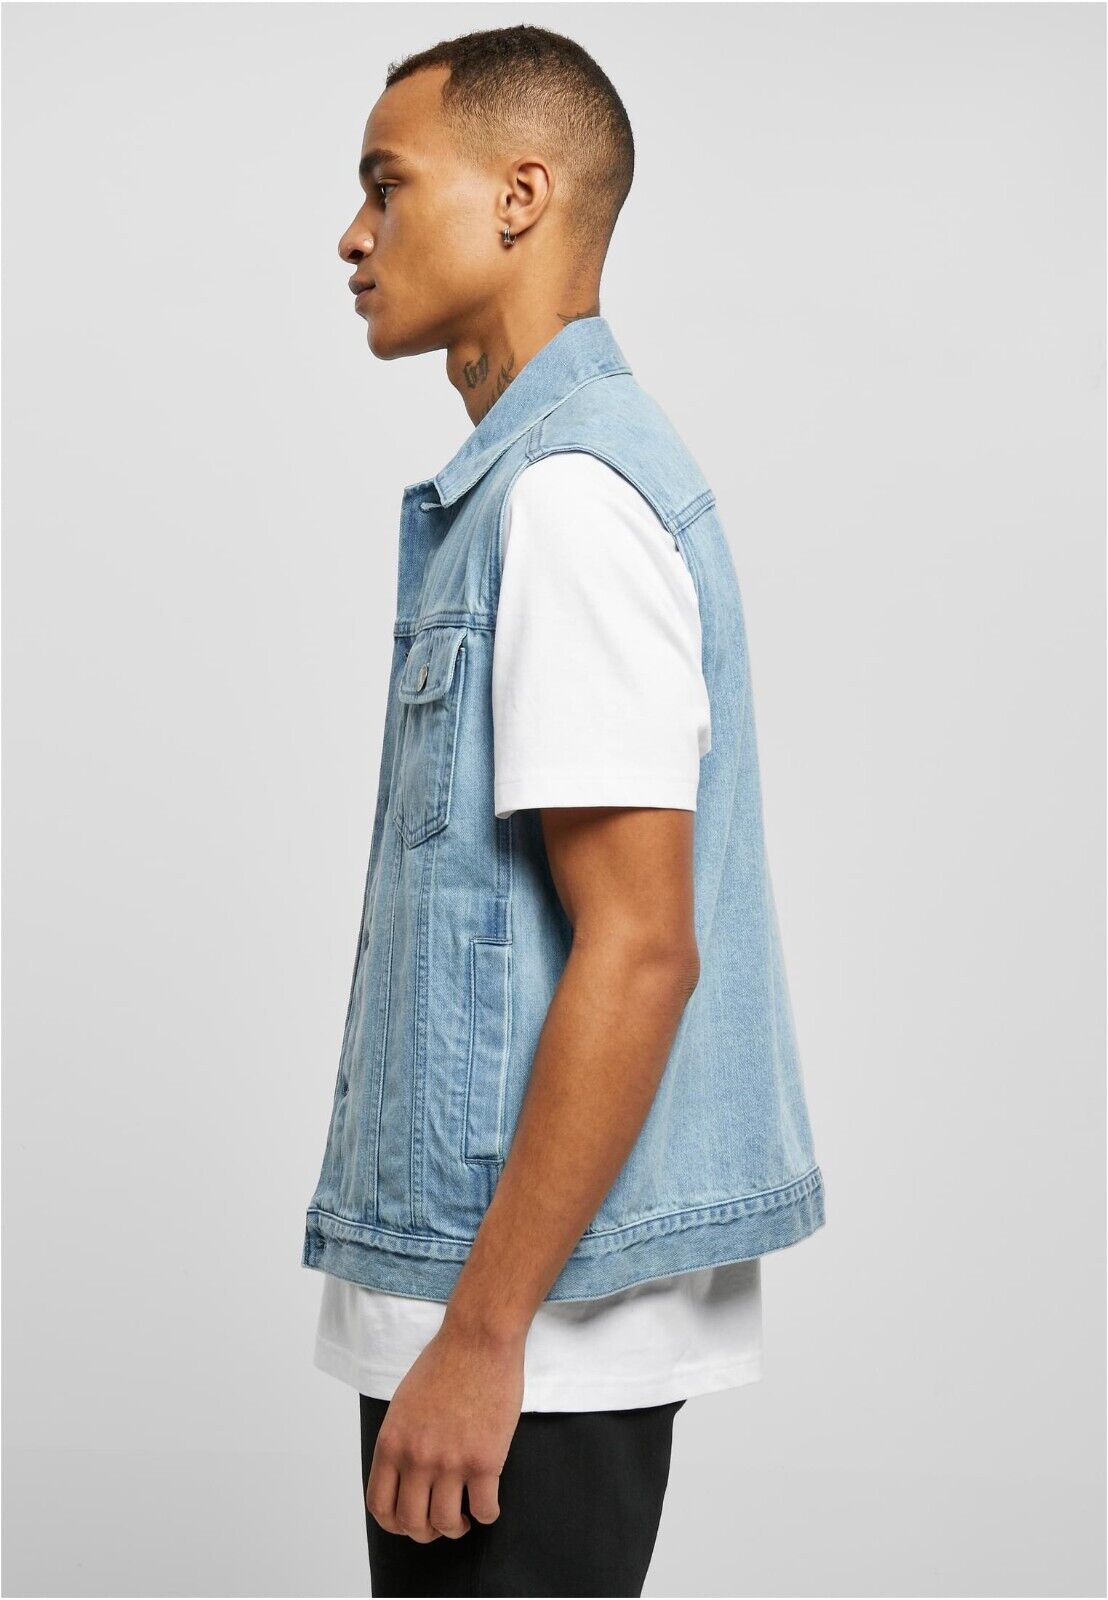 Size eBay Classics Denim Jeans Jacket Men\'s Urban 3XL Vest Vest |